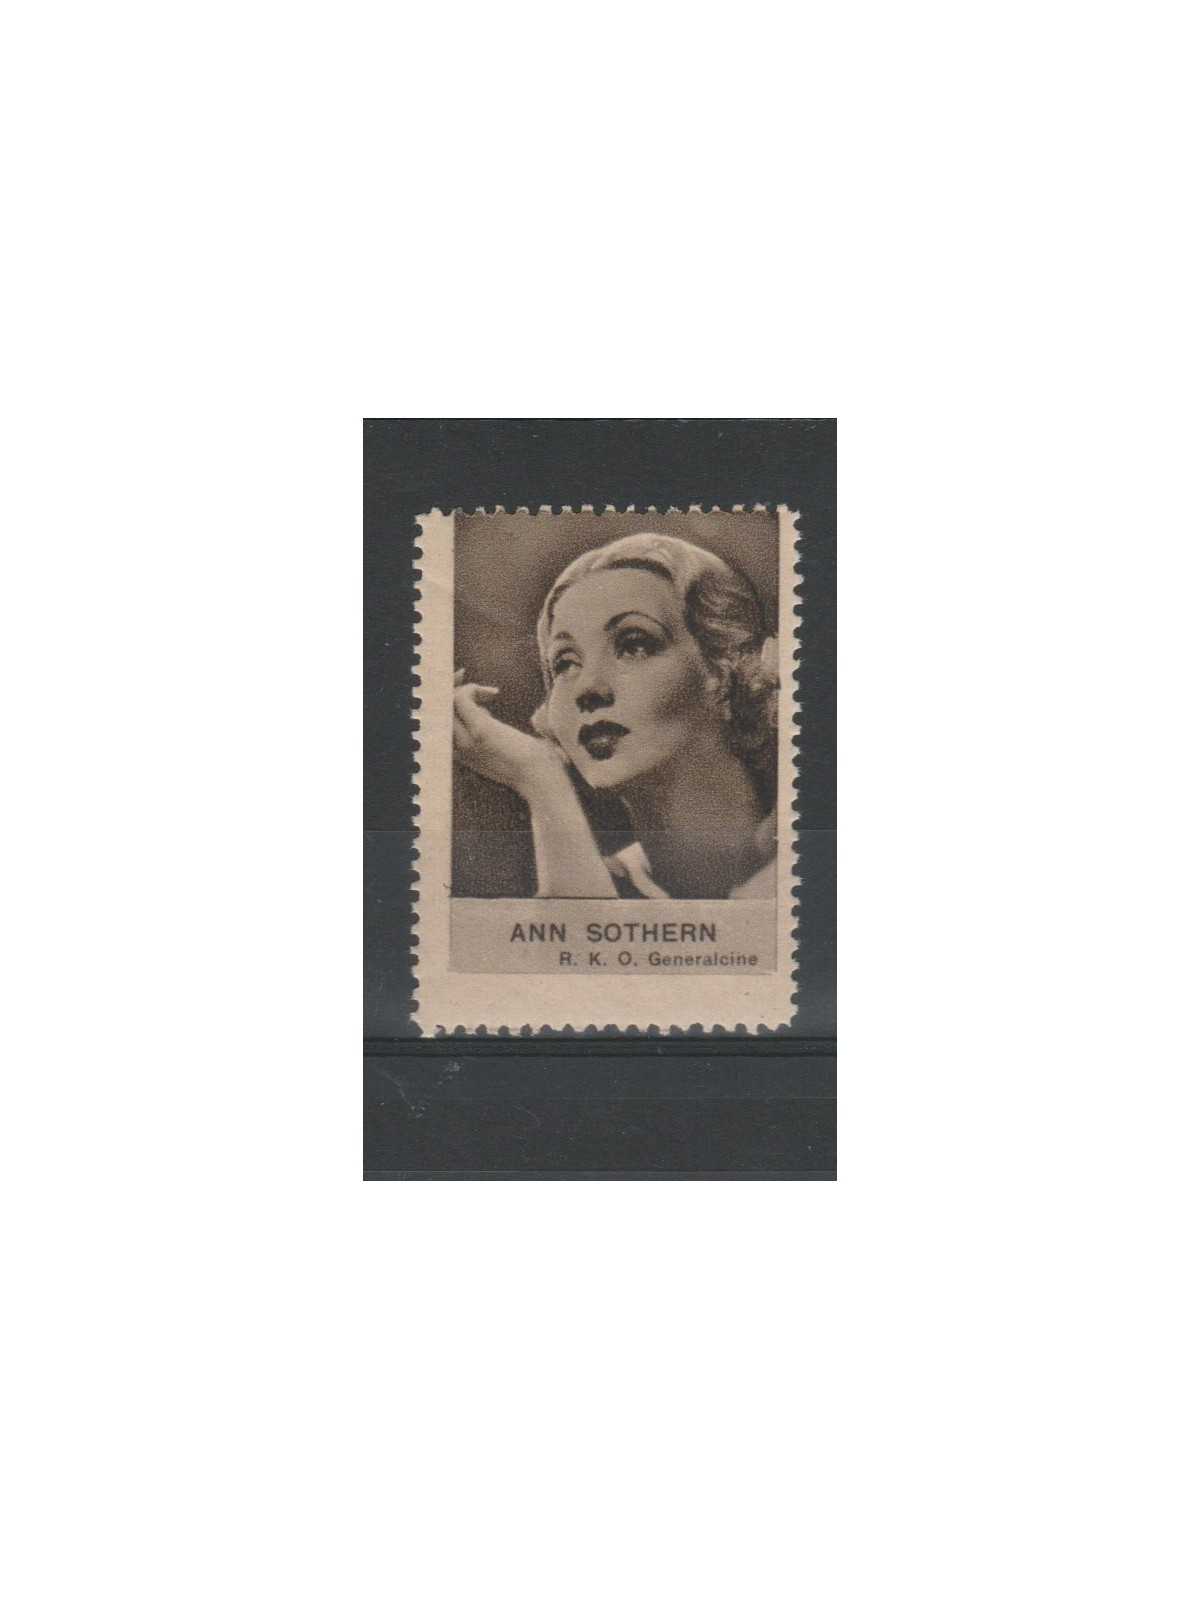 1938 ANN SOTHERN RARO ERINNOFILO CINEMA ANNO XVII MF19640